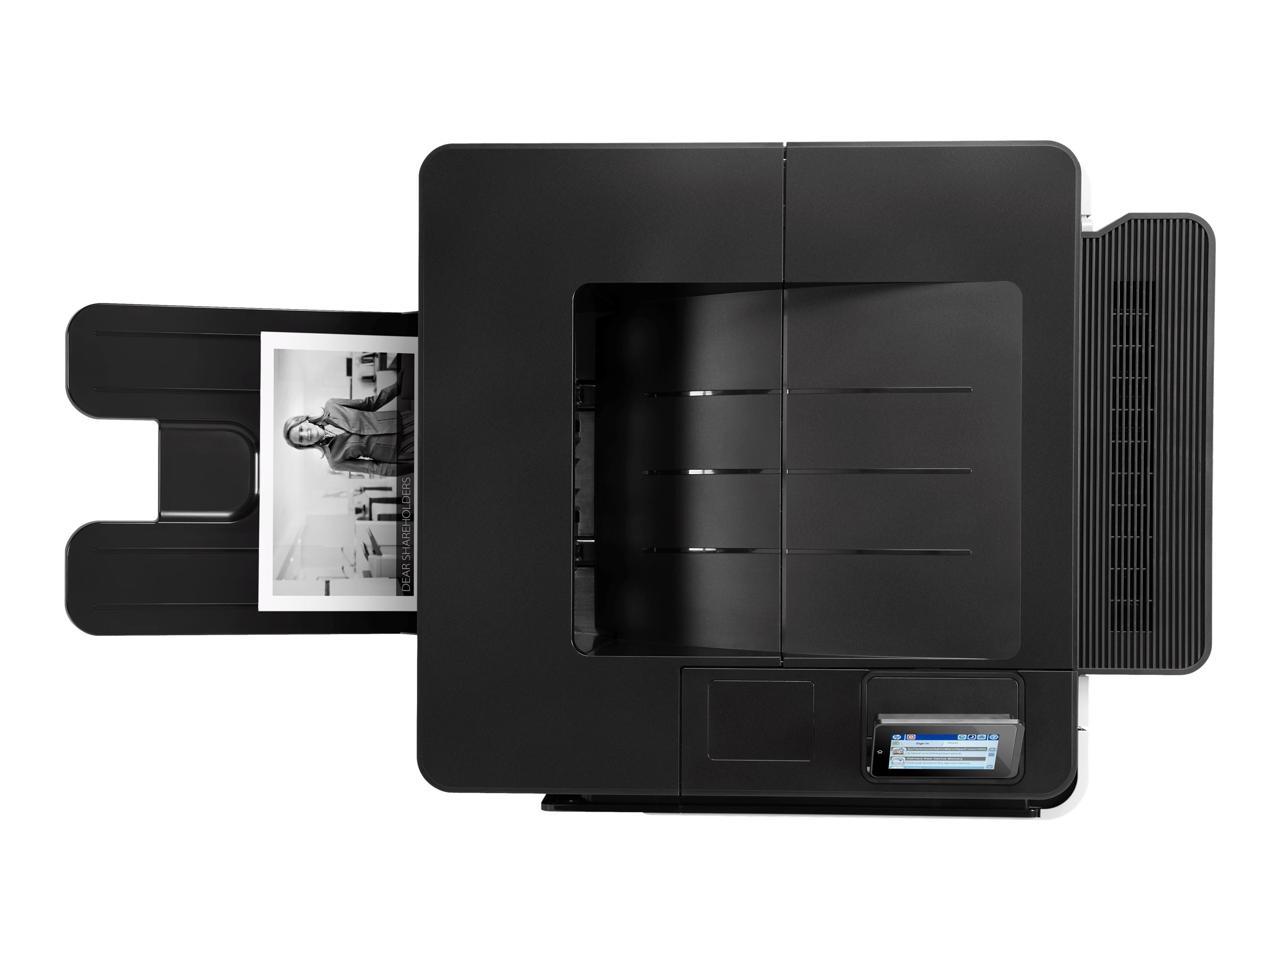 HP LaserJet Enterprise M806dn (CZ244A) 1200 x 1200 dpi USB / Ethernt Monochrome Laser Printer - image 2 of 4